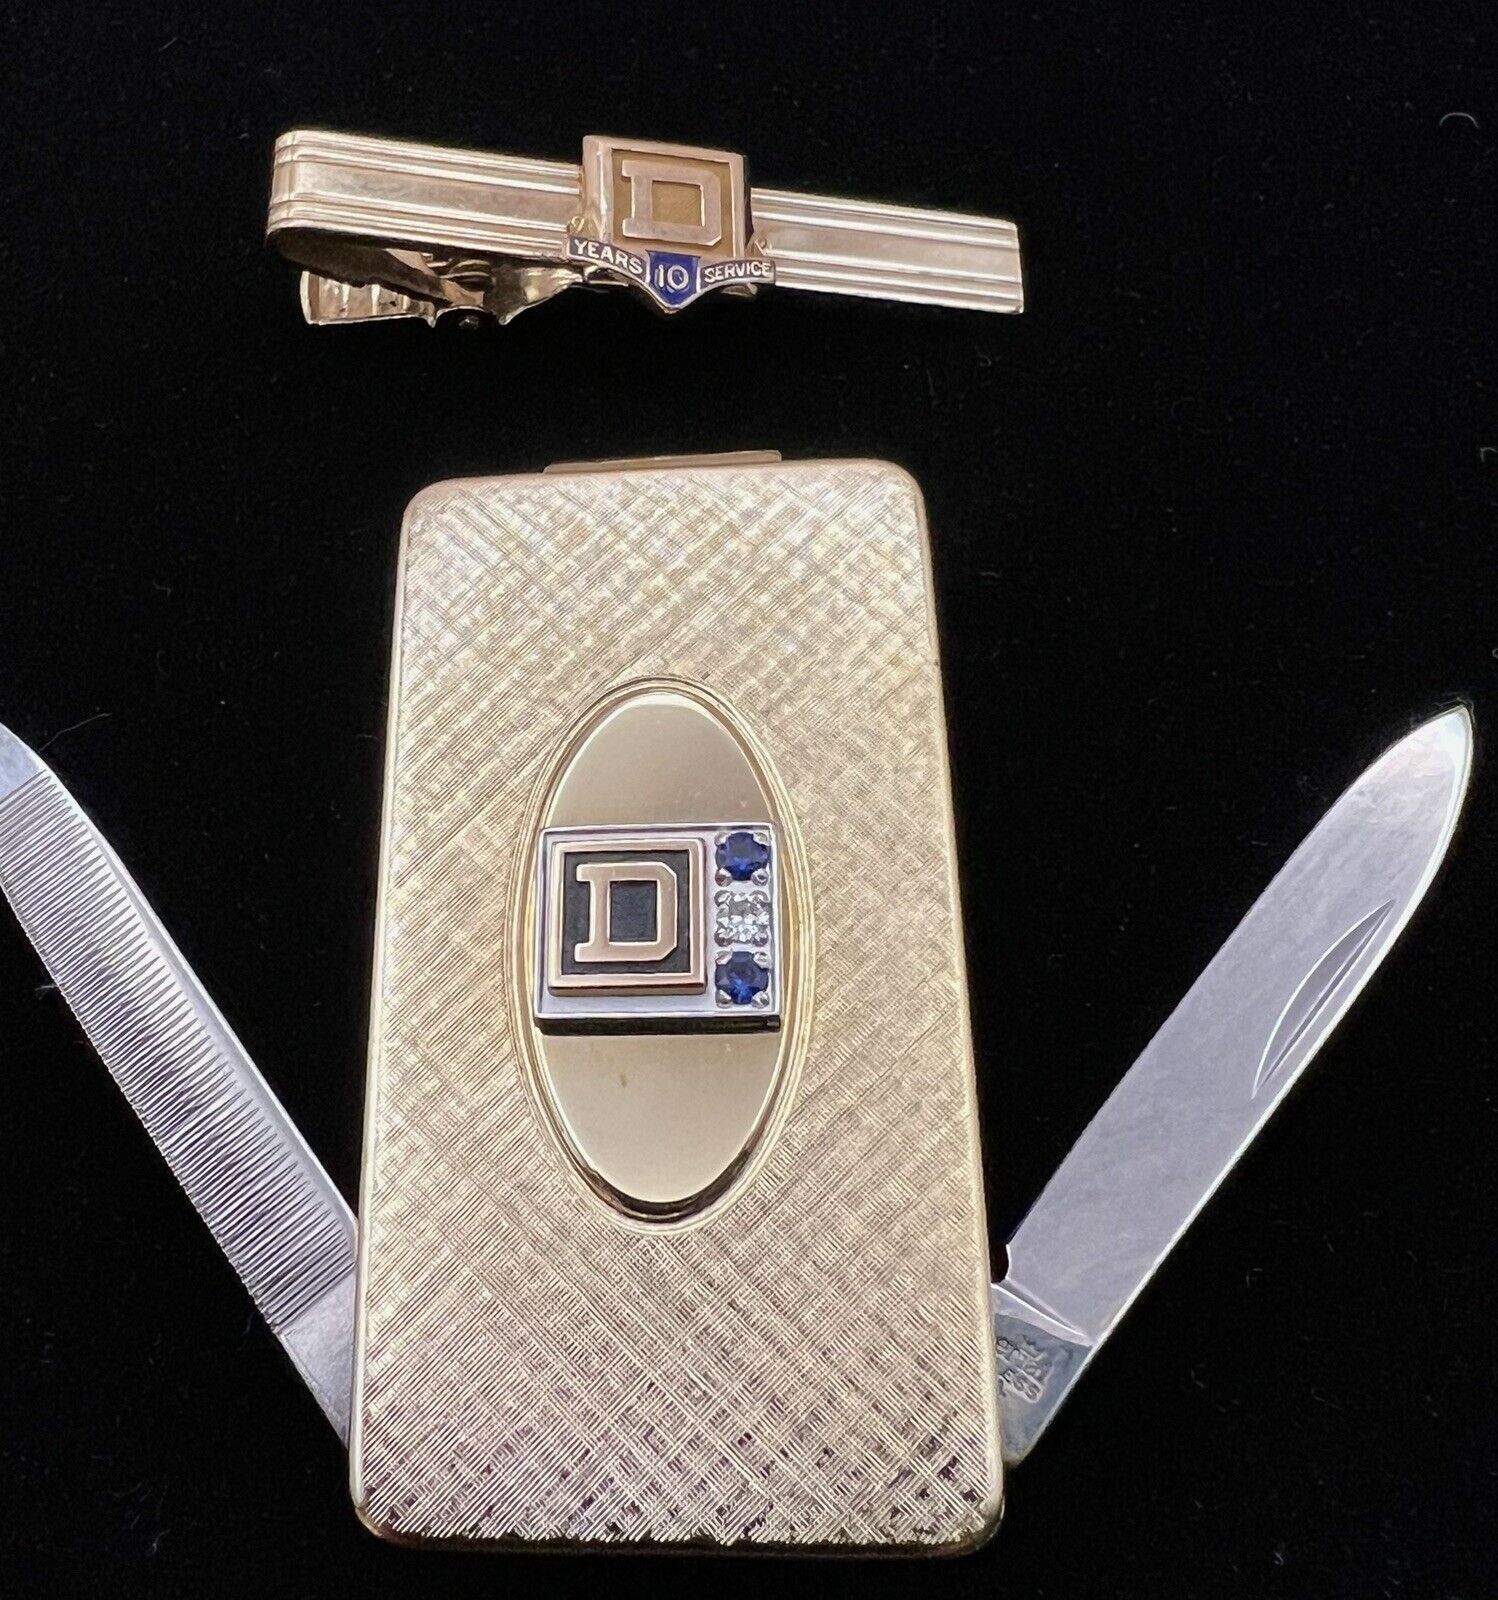 SQUARE D Money Clip/knife/file *REAL DIAMOND/Sapphire & Bonus Tie Clip Emp Award